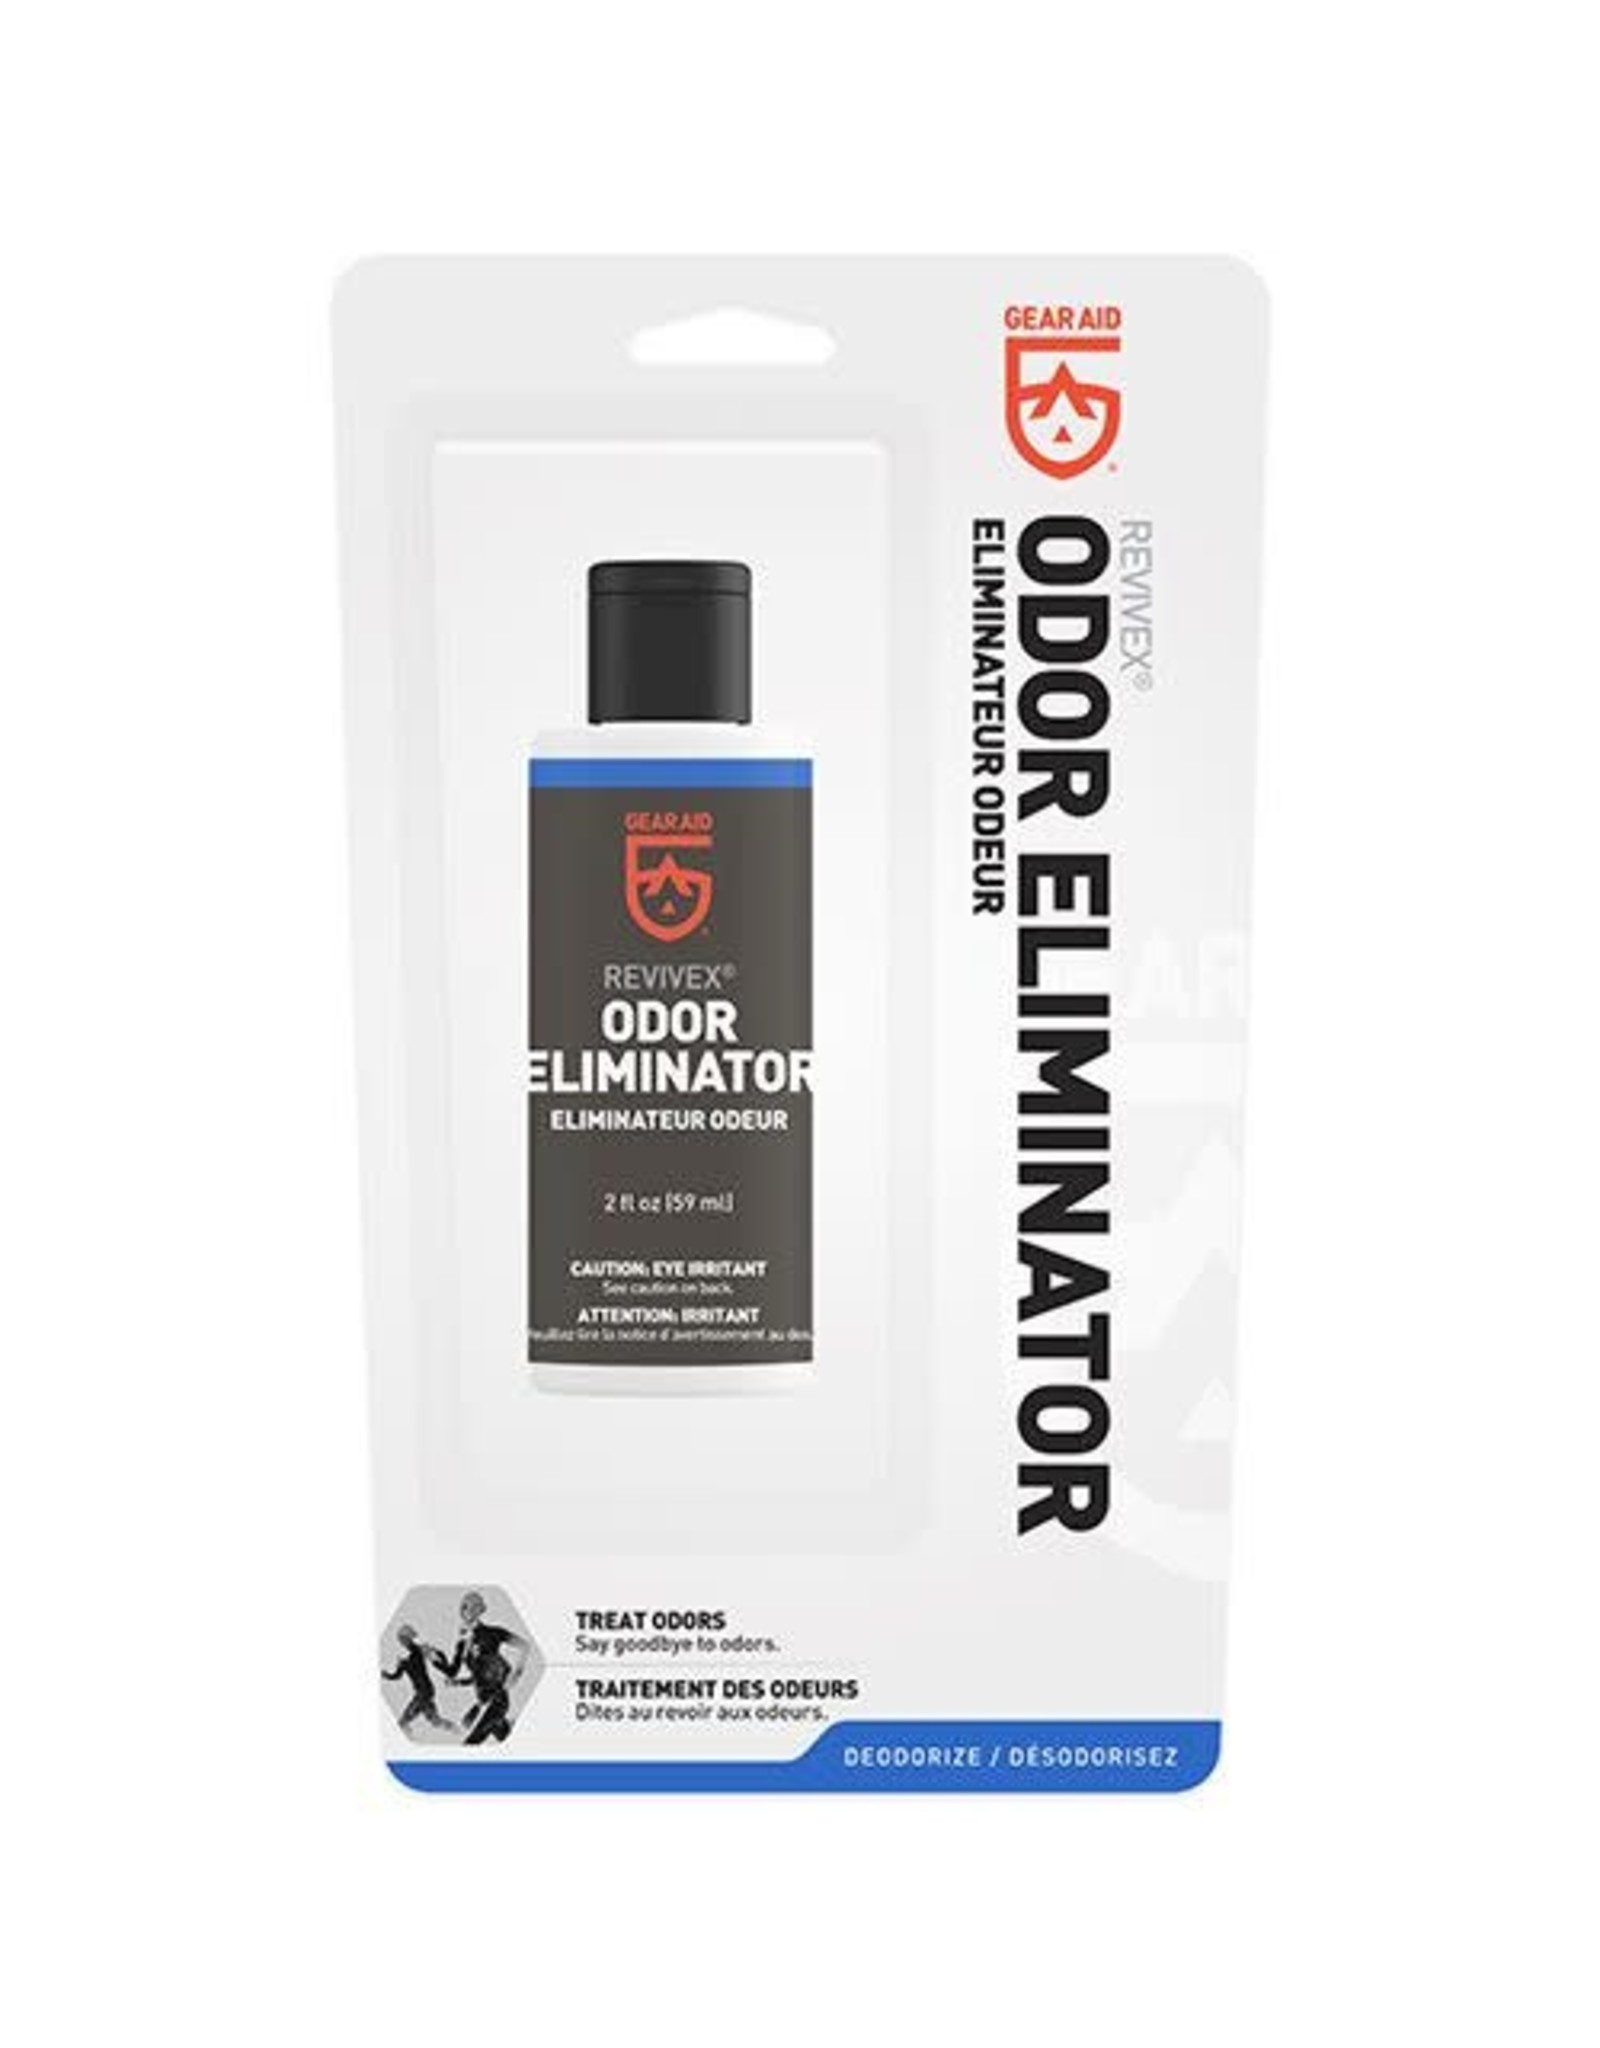 Gear Aid MiraZyme Odor Eliminator 2oz